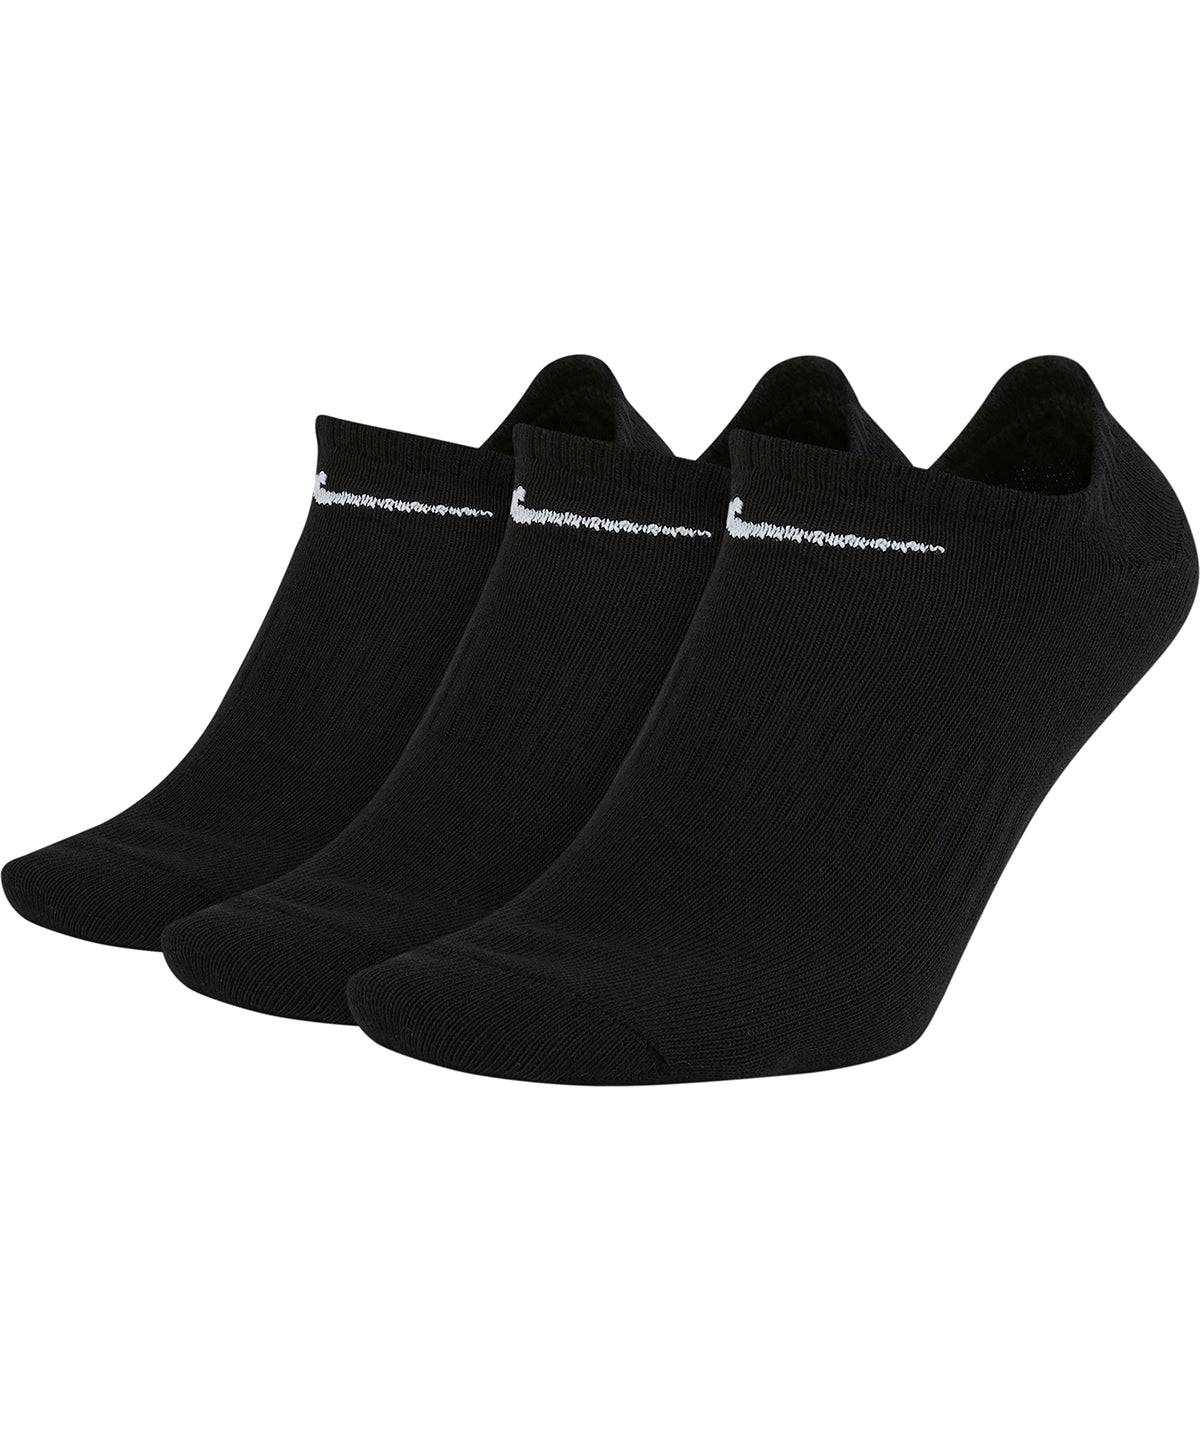 Black - Nike everyday lightweight no-show sock (3 pairs)